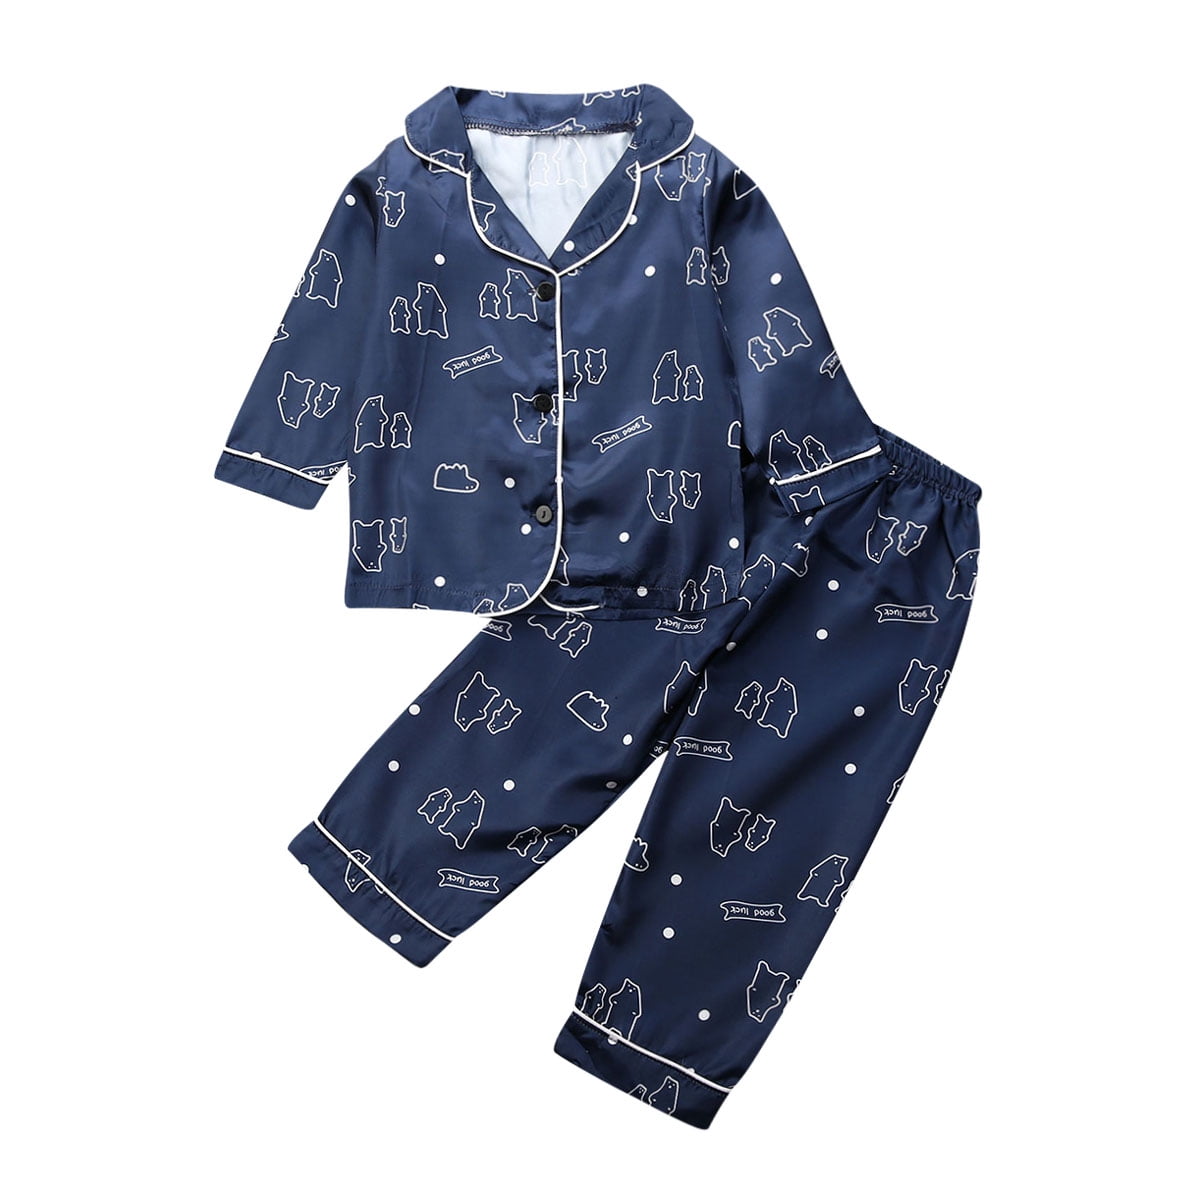 BLACKPING Toddler Baby Boy Girl Cotton Pajamas Set Two-Piece Pj Sets Sleepwear Loungewear Button-Down Pj Sets 